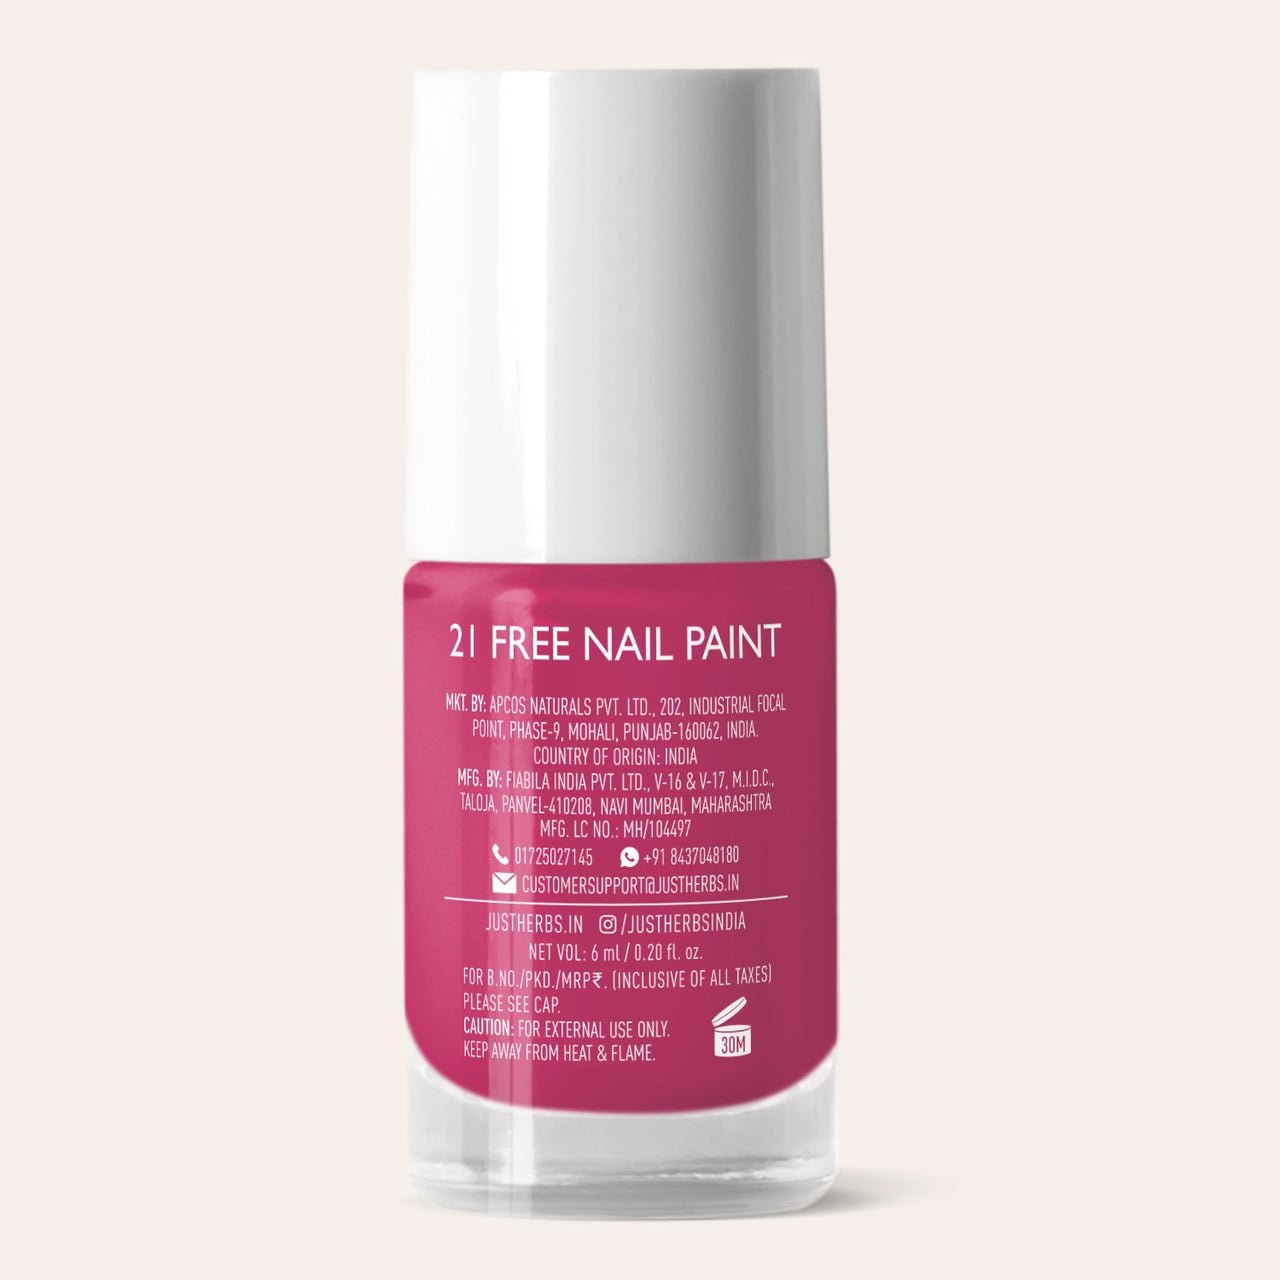 Nail Paints | 21-Free Formula - 6ml